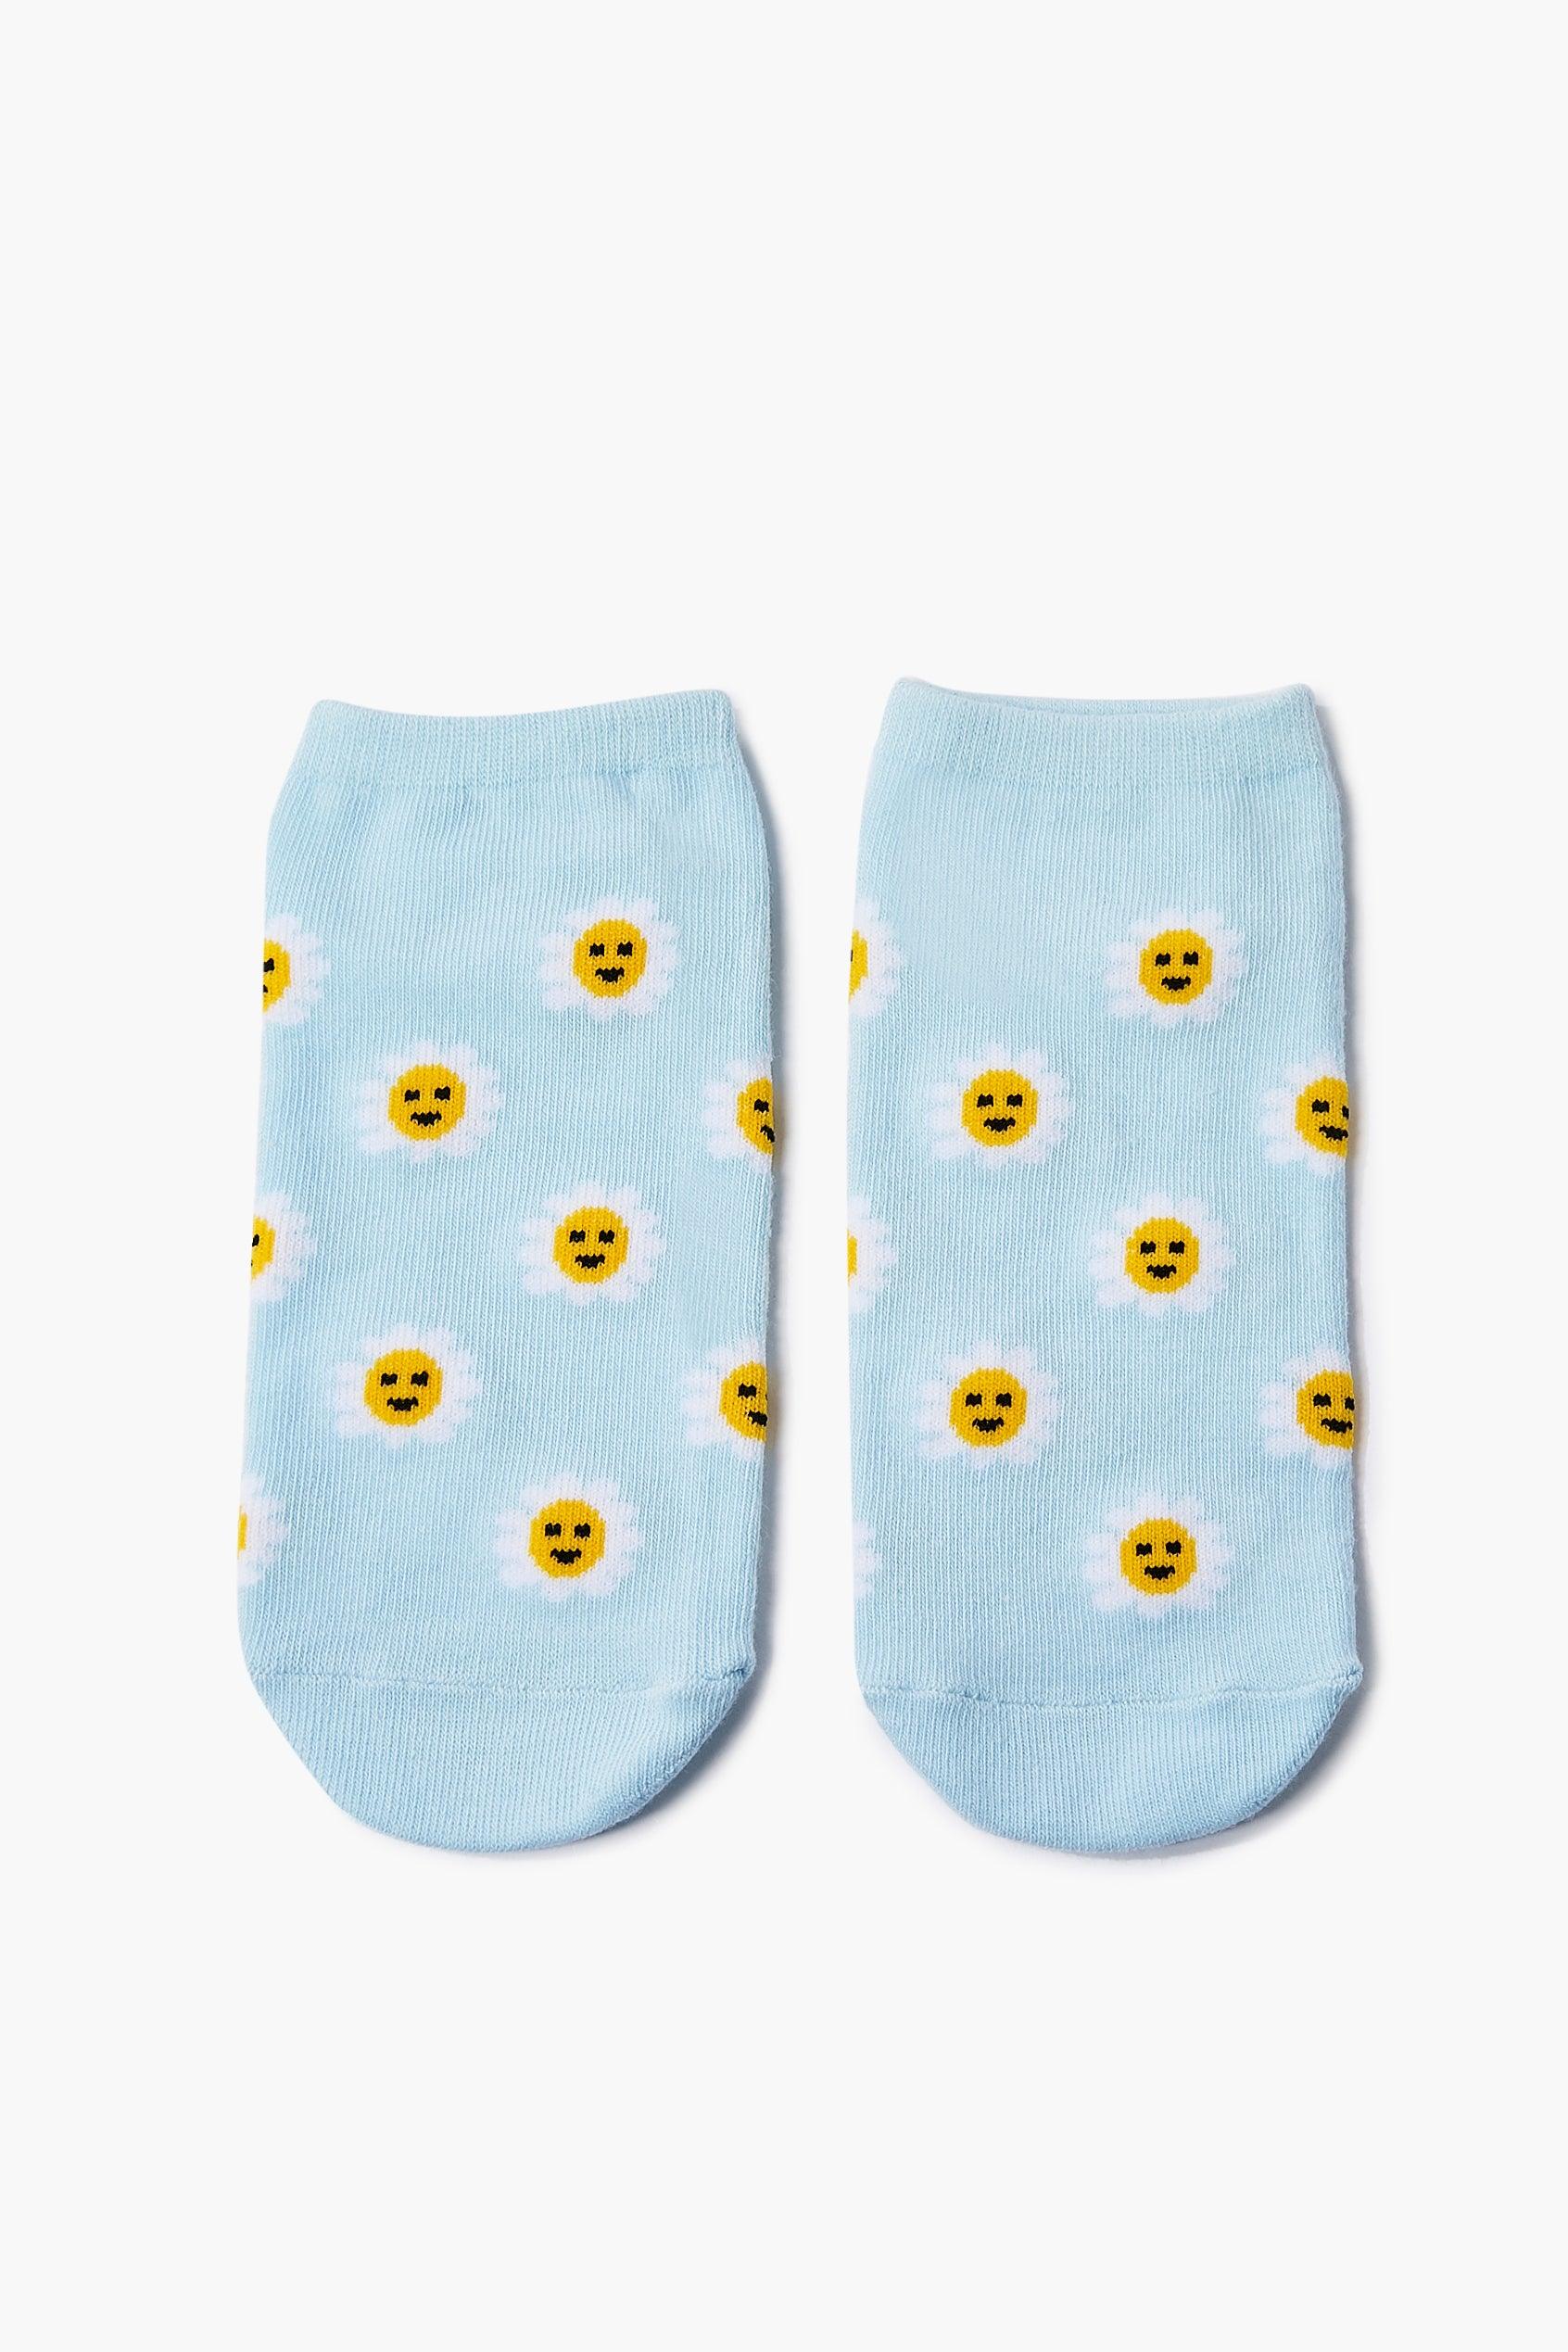 Bluemulti Daisy Print Ankle Socks   2